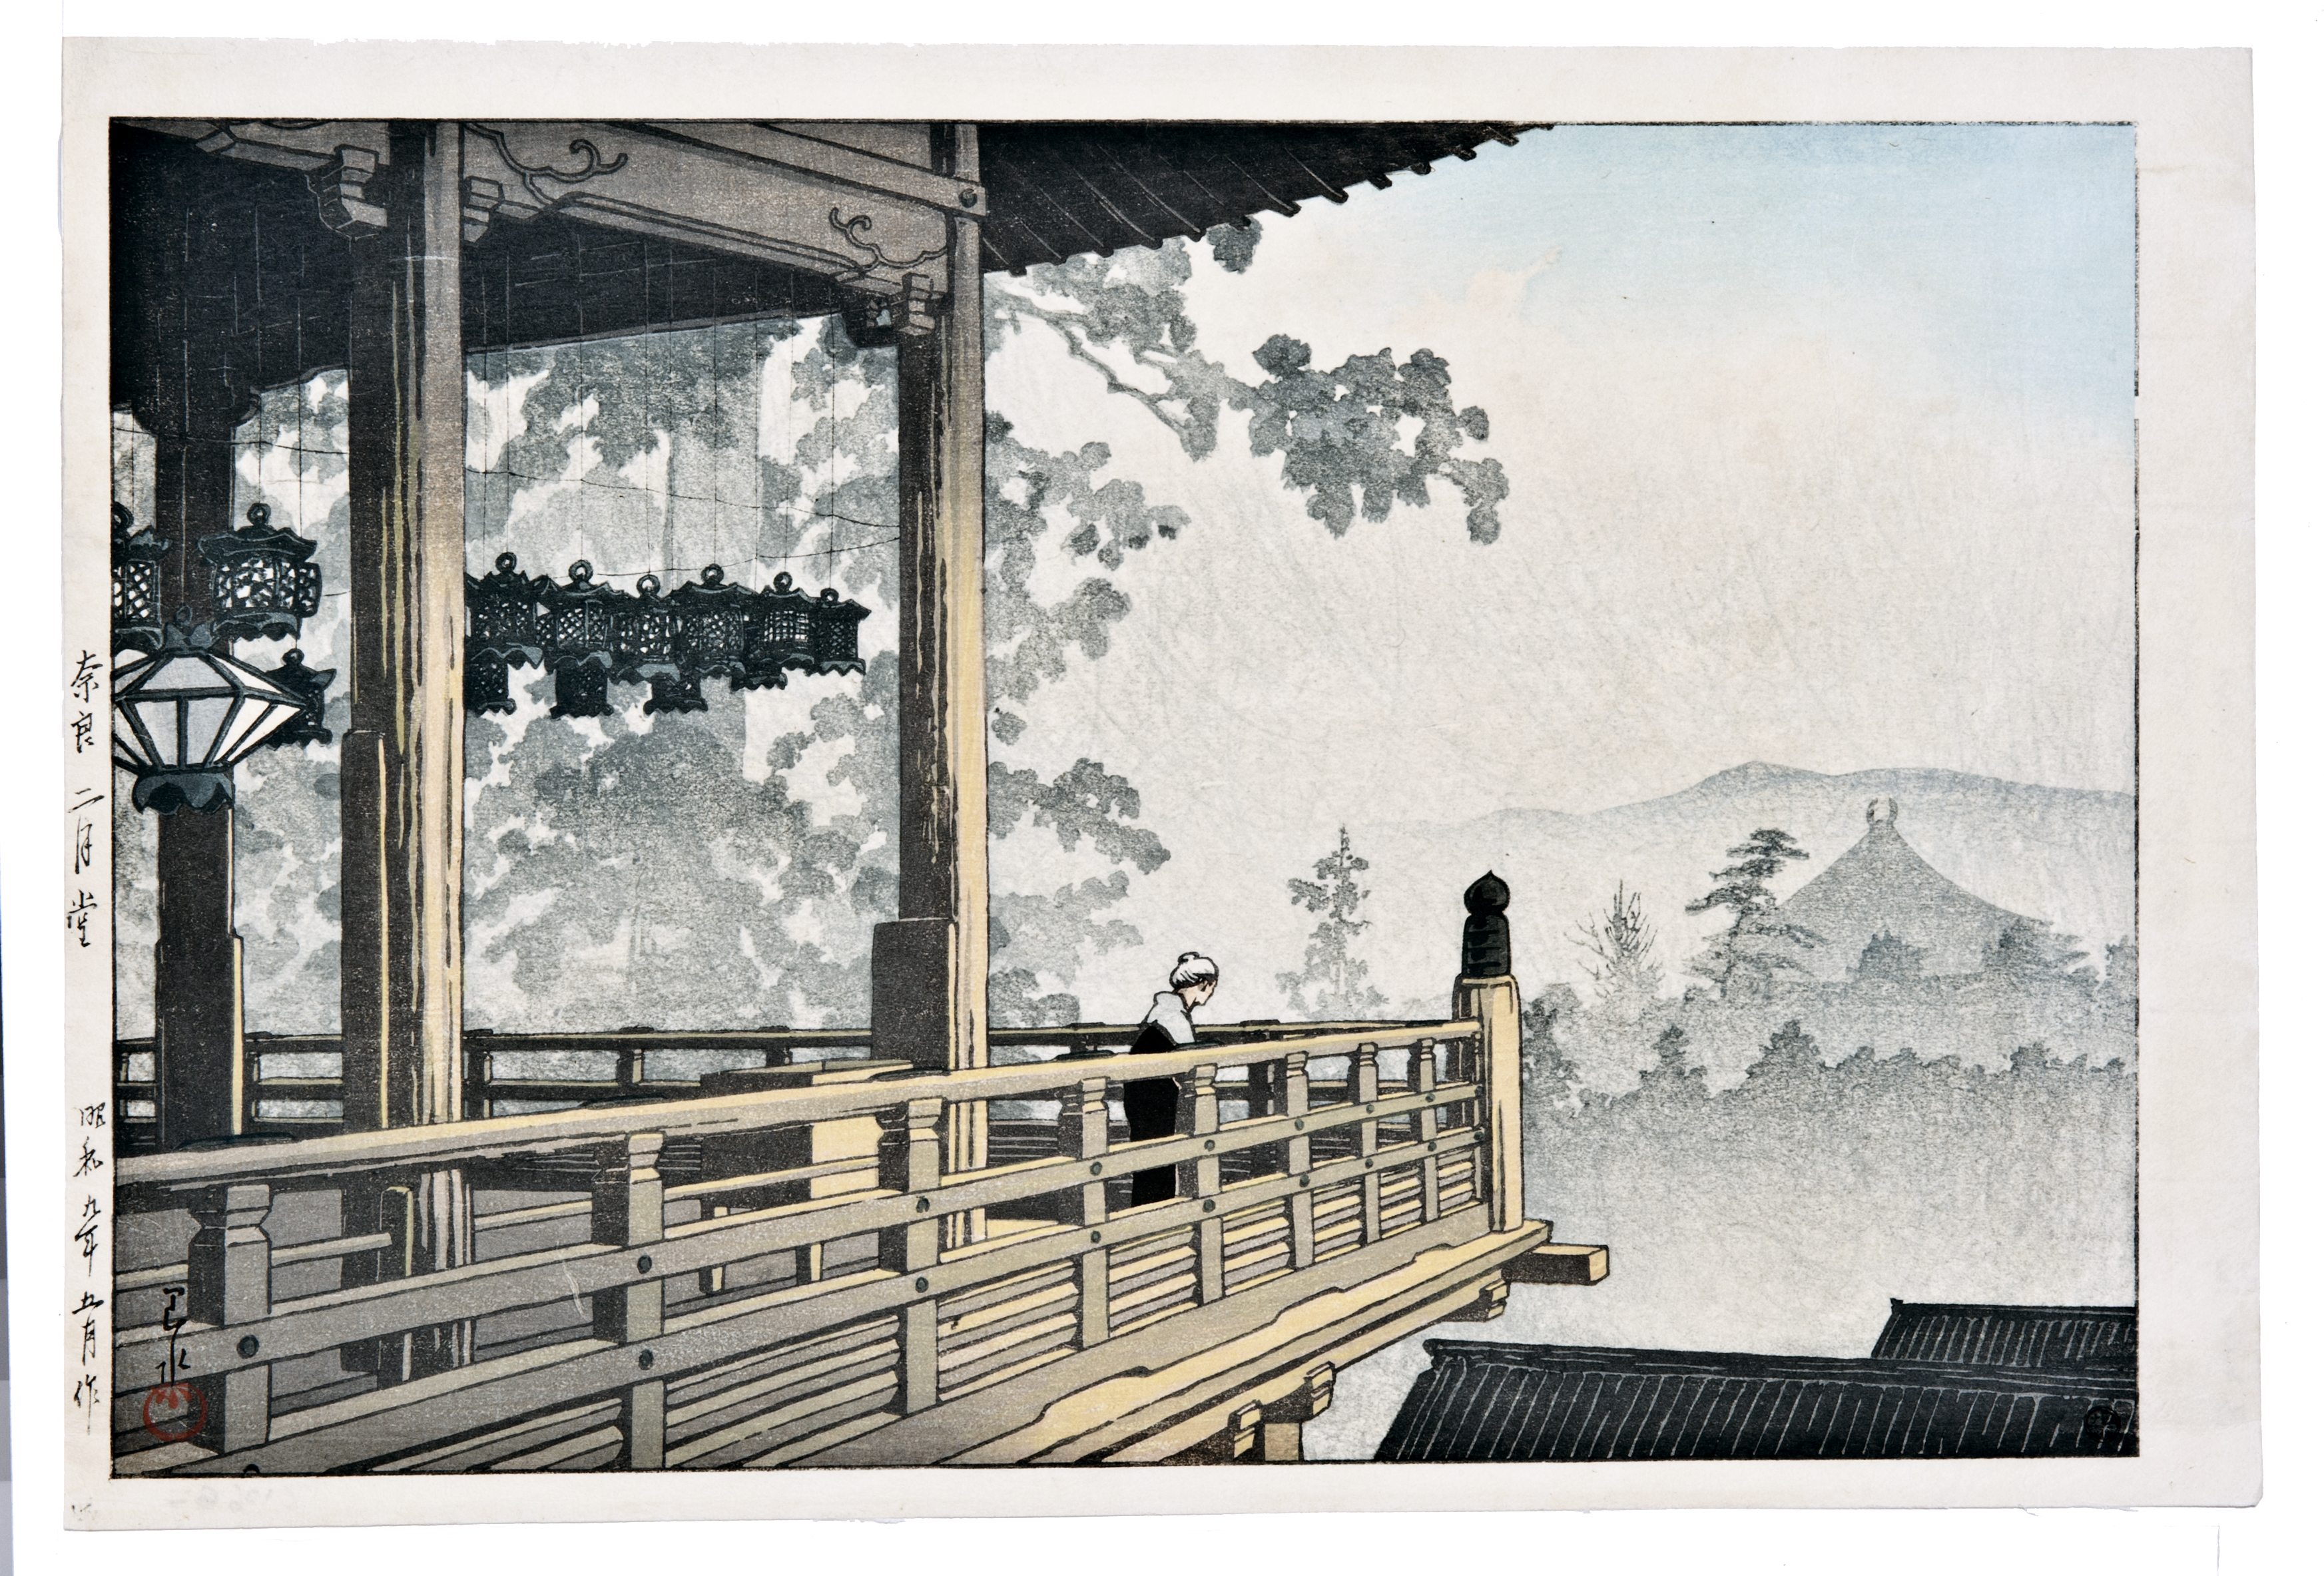 Japan Painting Asia Print Japanese Art Asian Architecture Meiji Showa Taisho 3490x2367